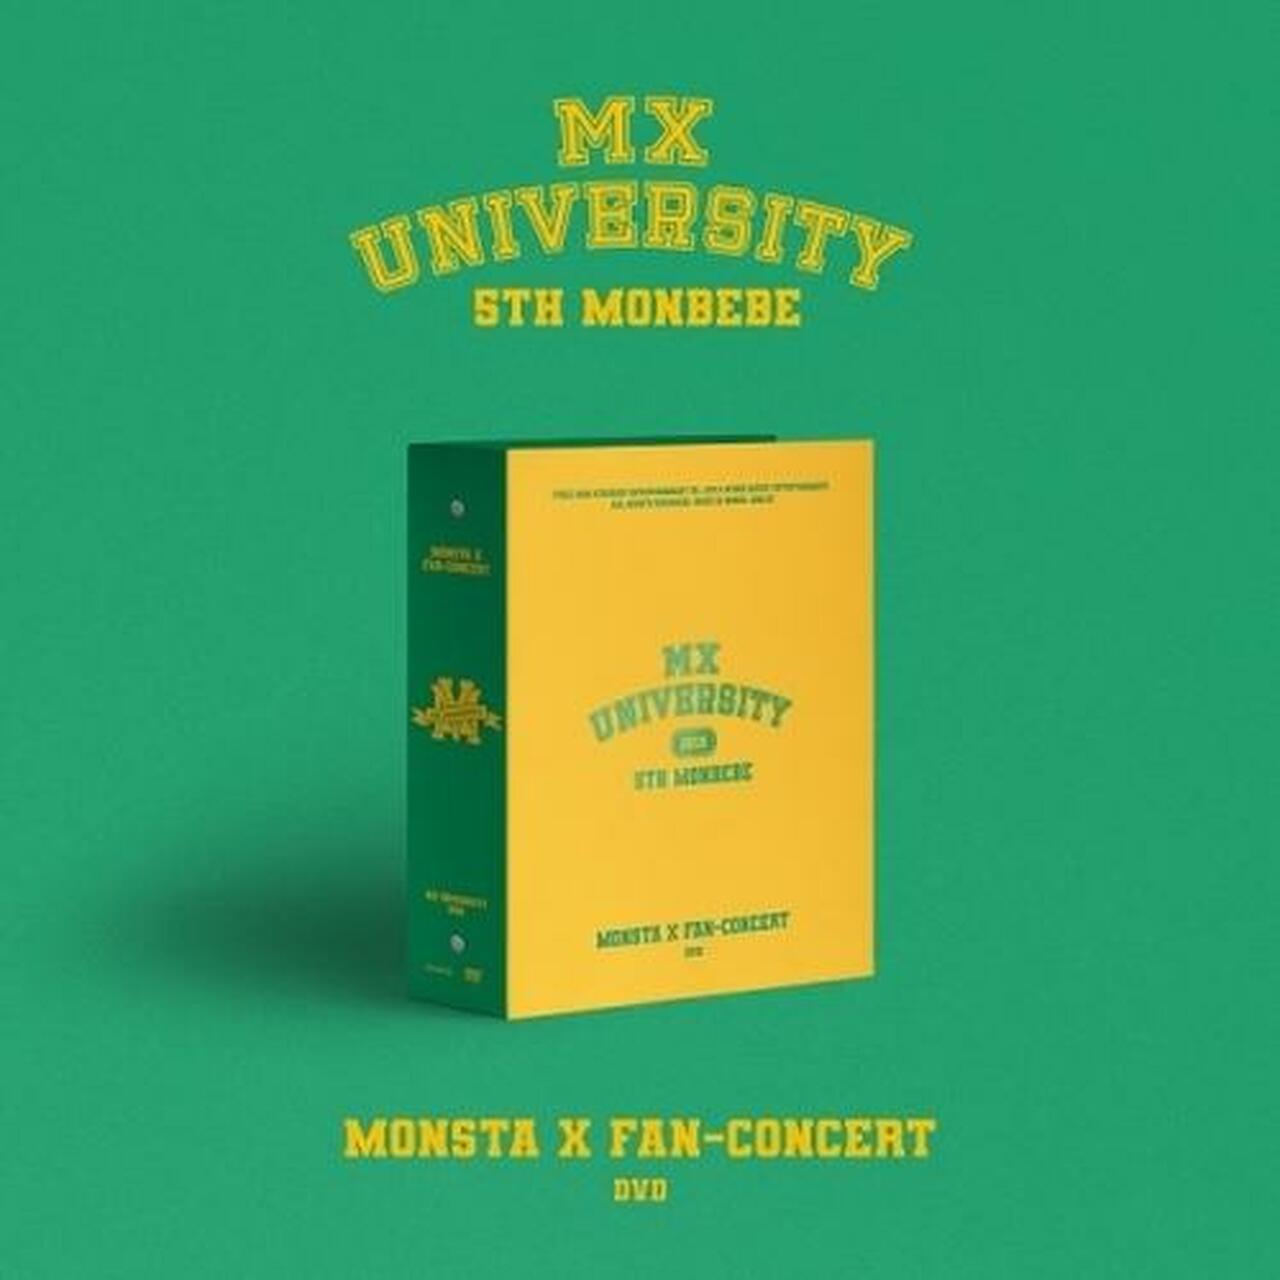 MONSTA X Official 2021 Fan-Concert [MX University] DVD – Kpop Omo